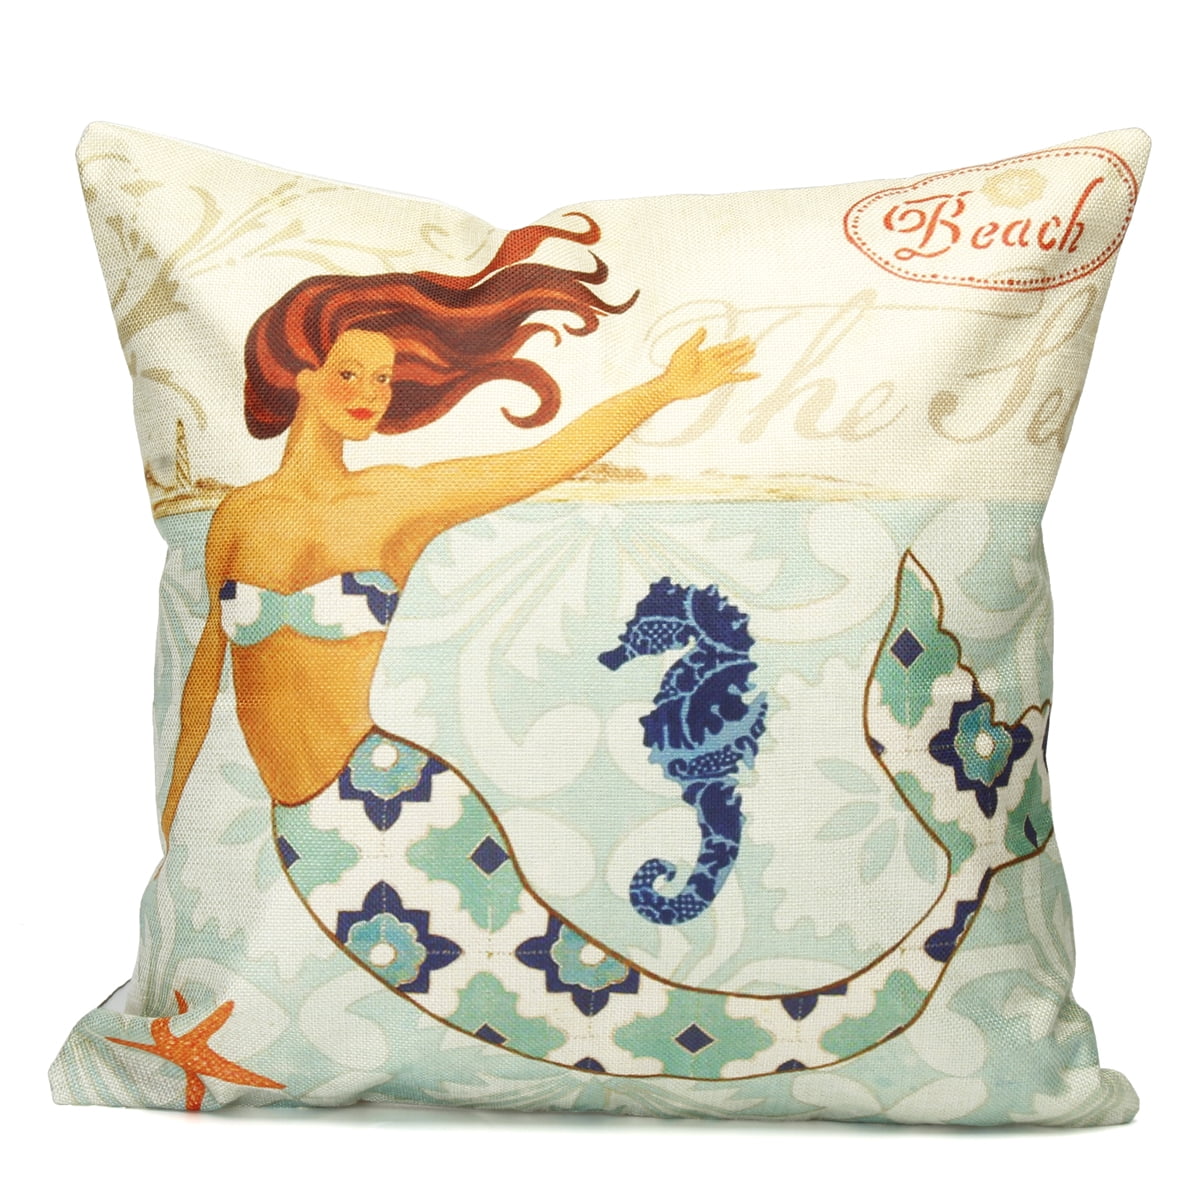 18" Vintage Mermaid Cotton Linen Cushion Cover Square Throw Pillow Case Decor